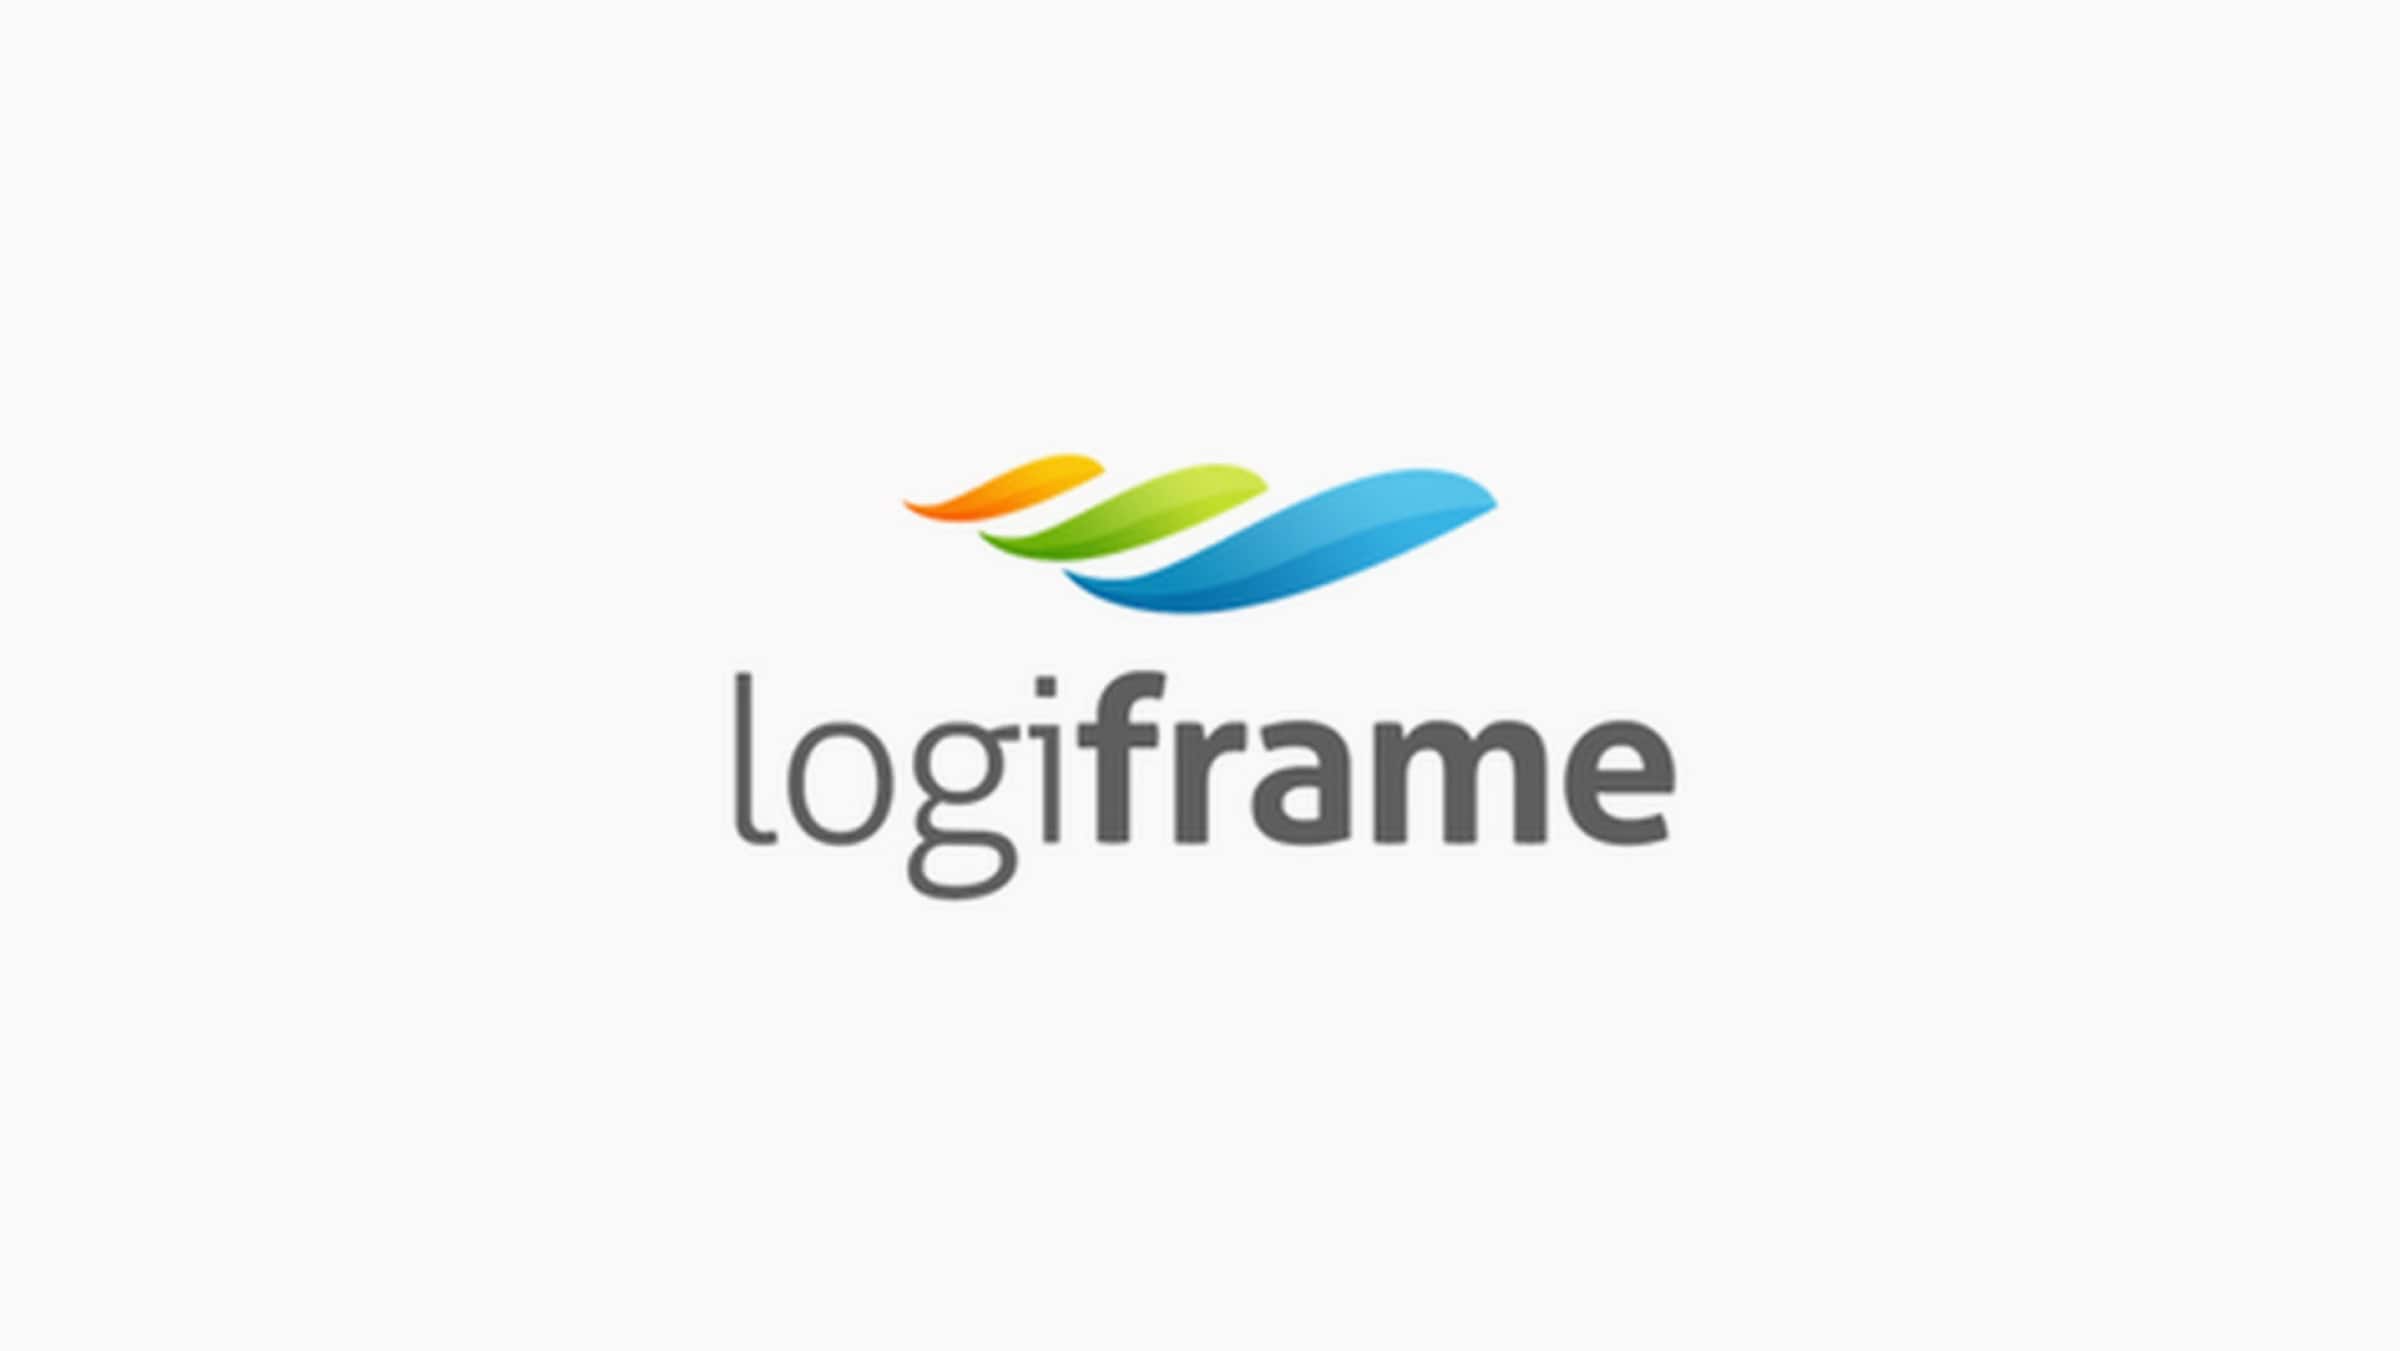 The Logiframe logo